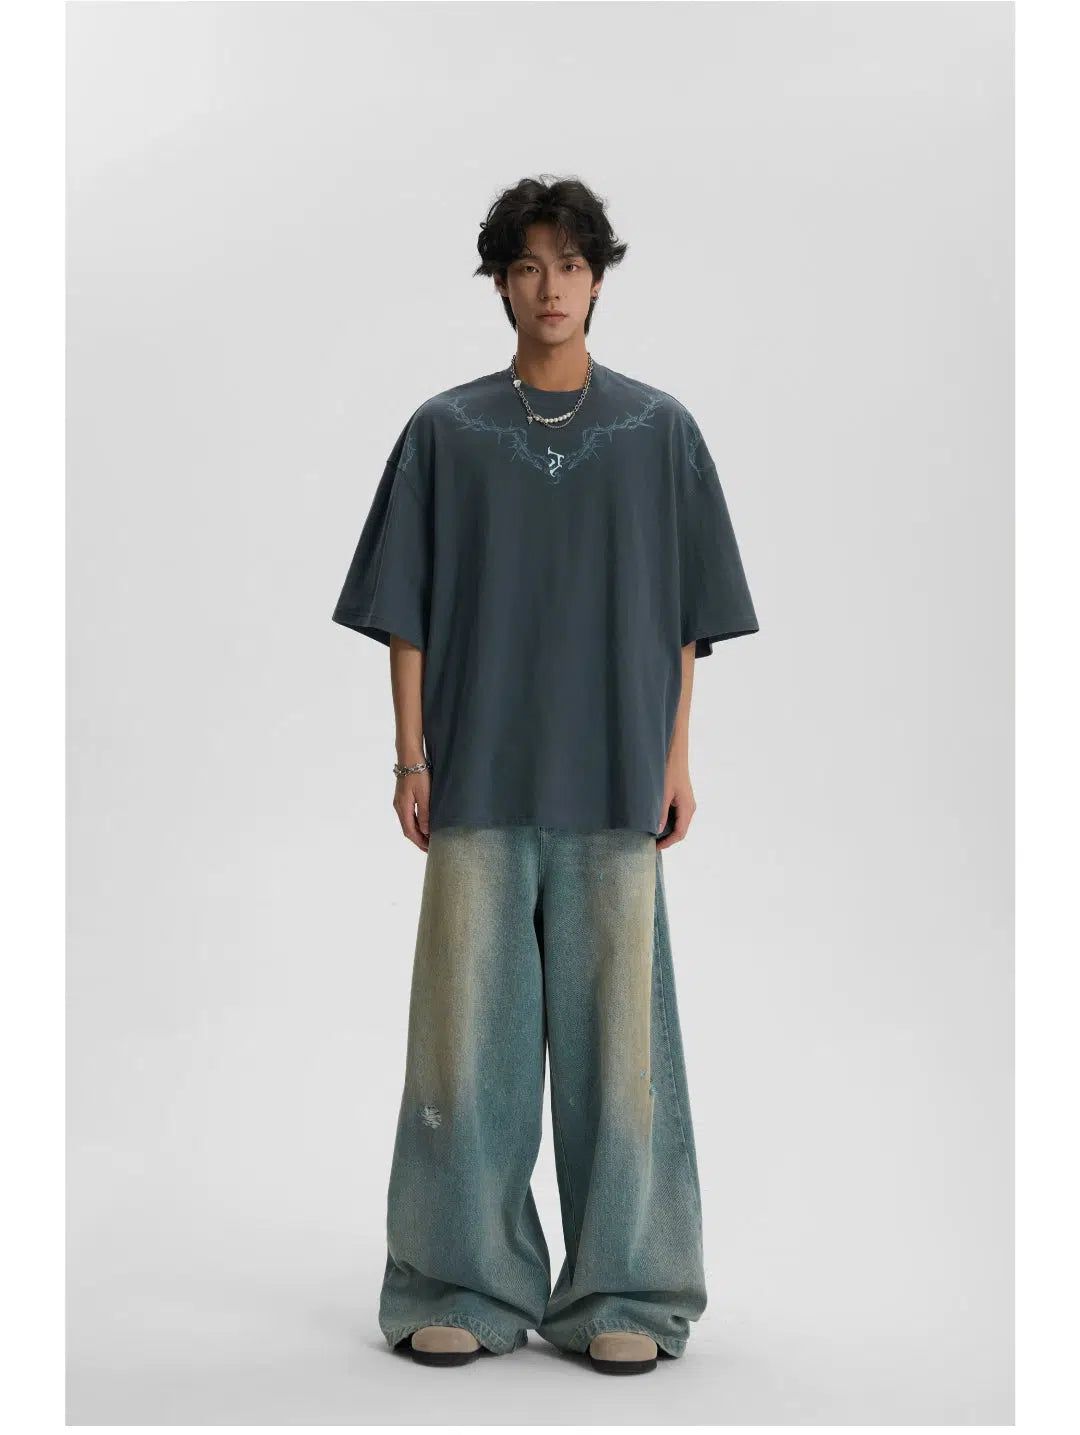 Thorned Stems Grunge T-Shirt Korean Street Fashion T-Shirt By JHYQ Shop Online at OH Vault